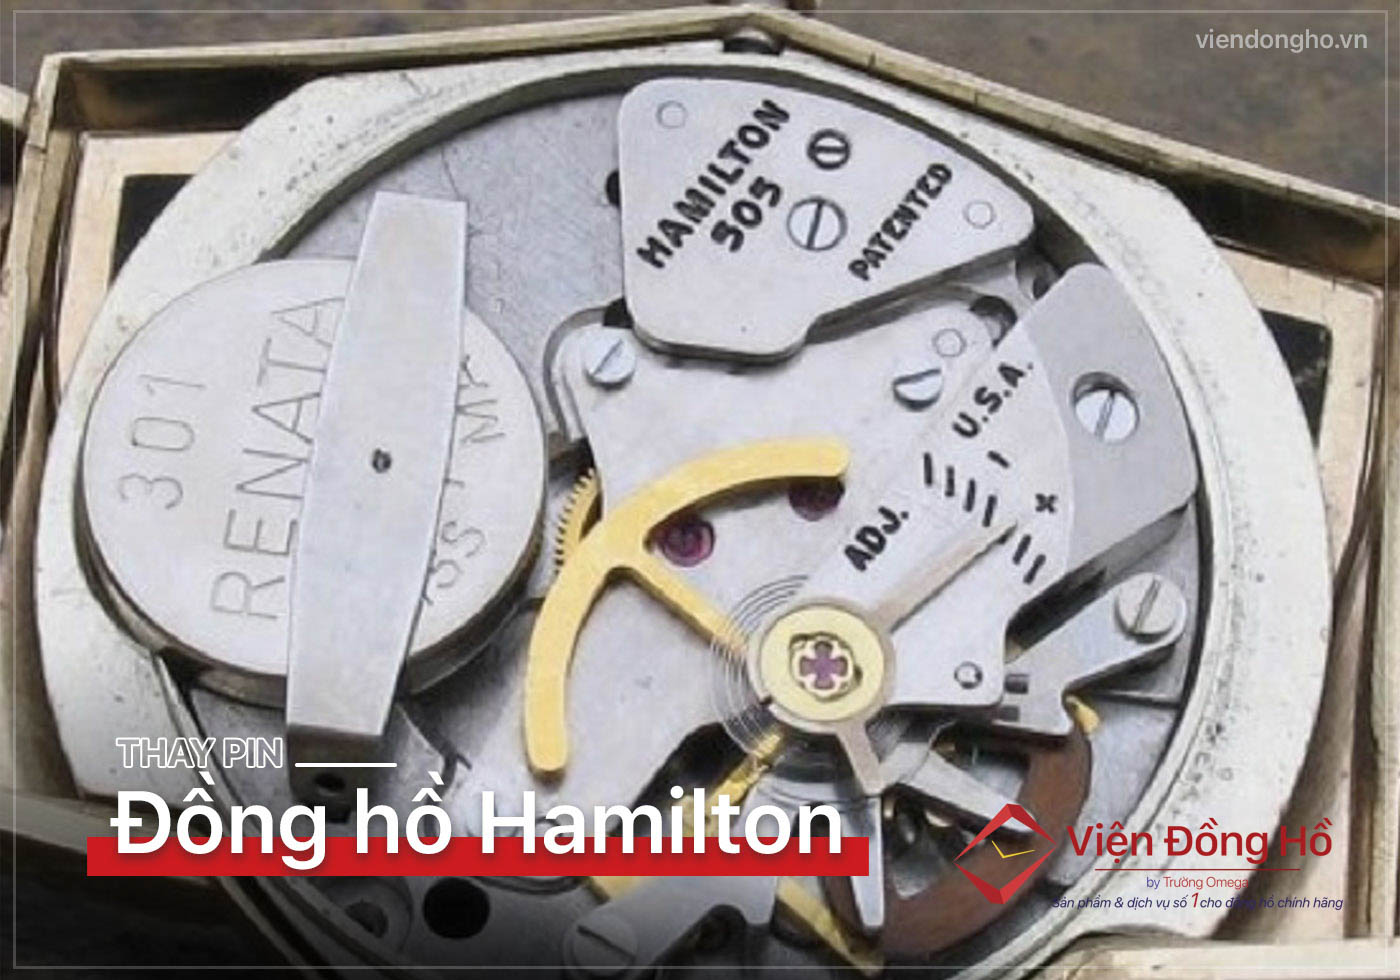 Thay pin dong ho Hamilton 5